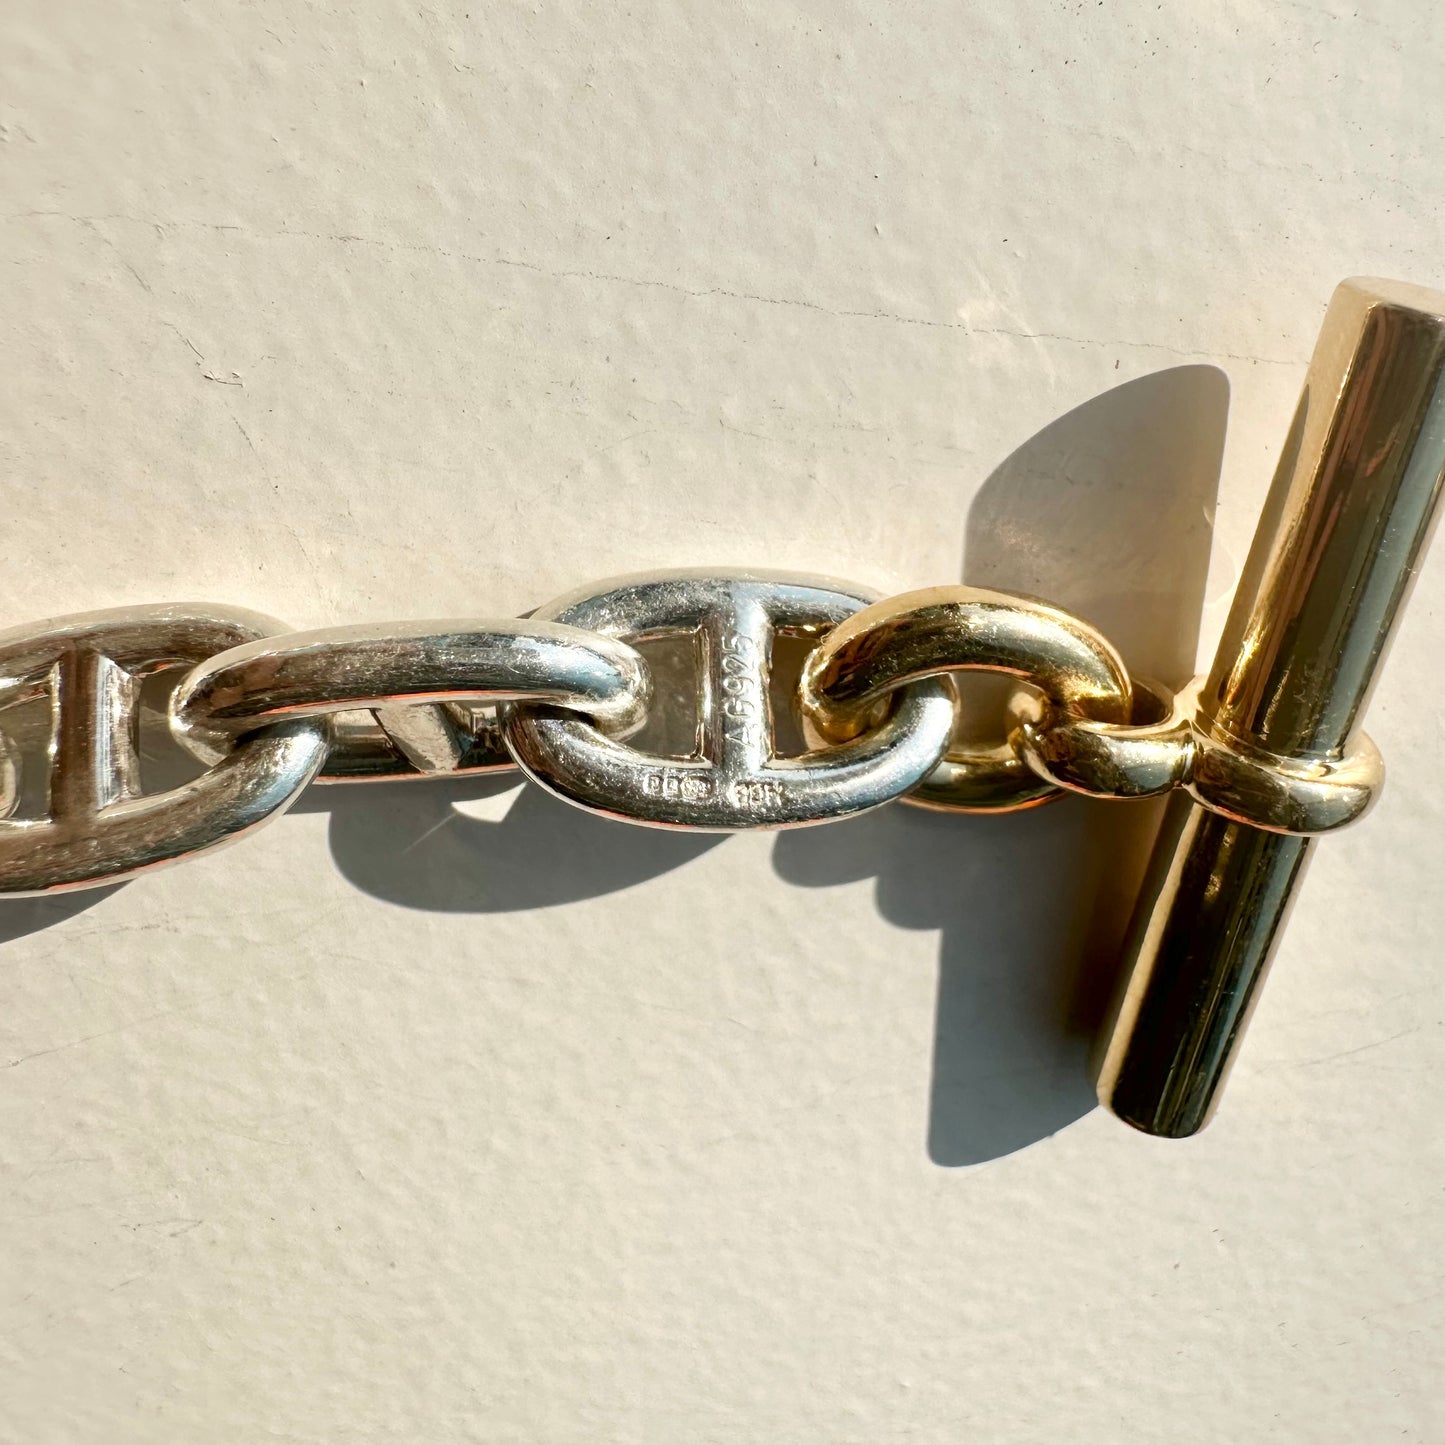 03s Hermès Chaine d'ancre bracelet MM 17 925 750 [販売価格非公開]